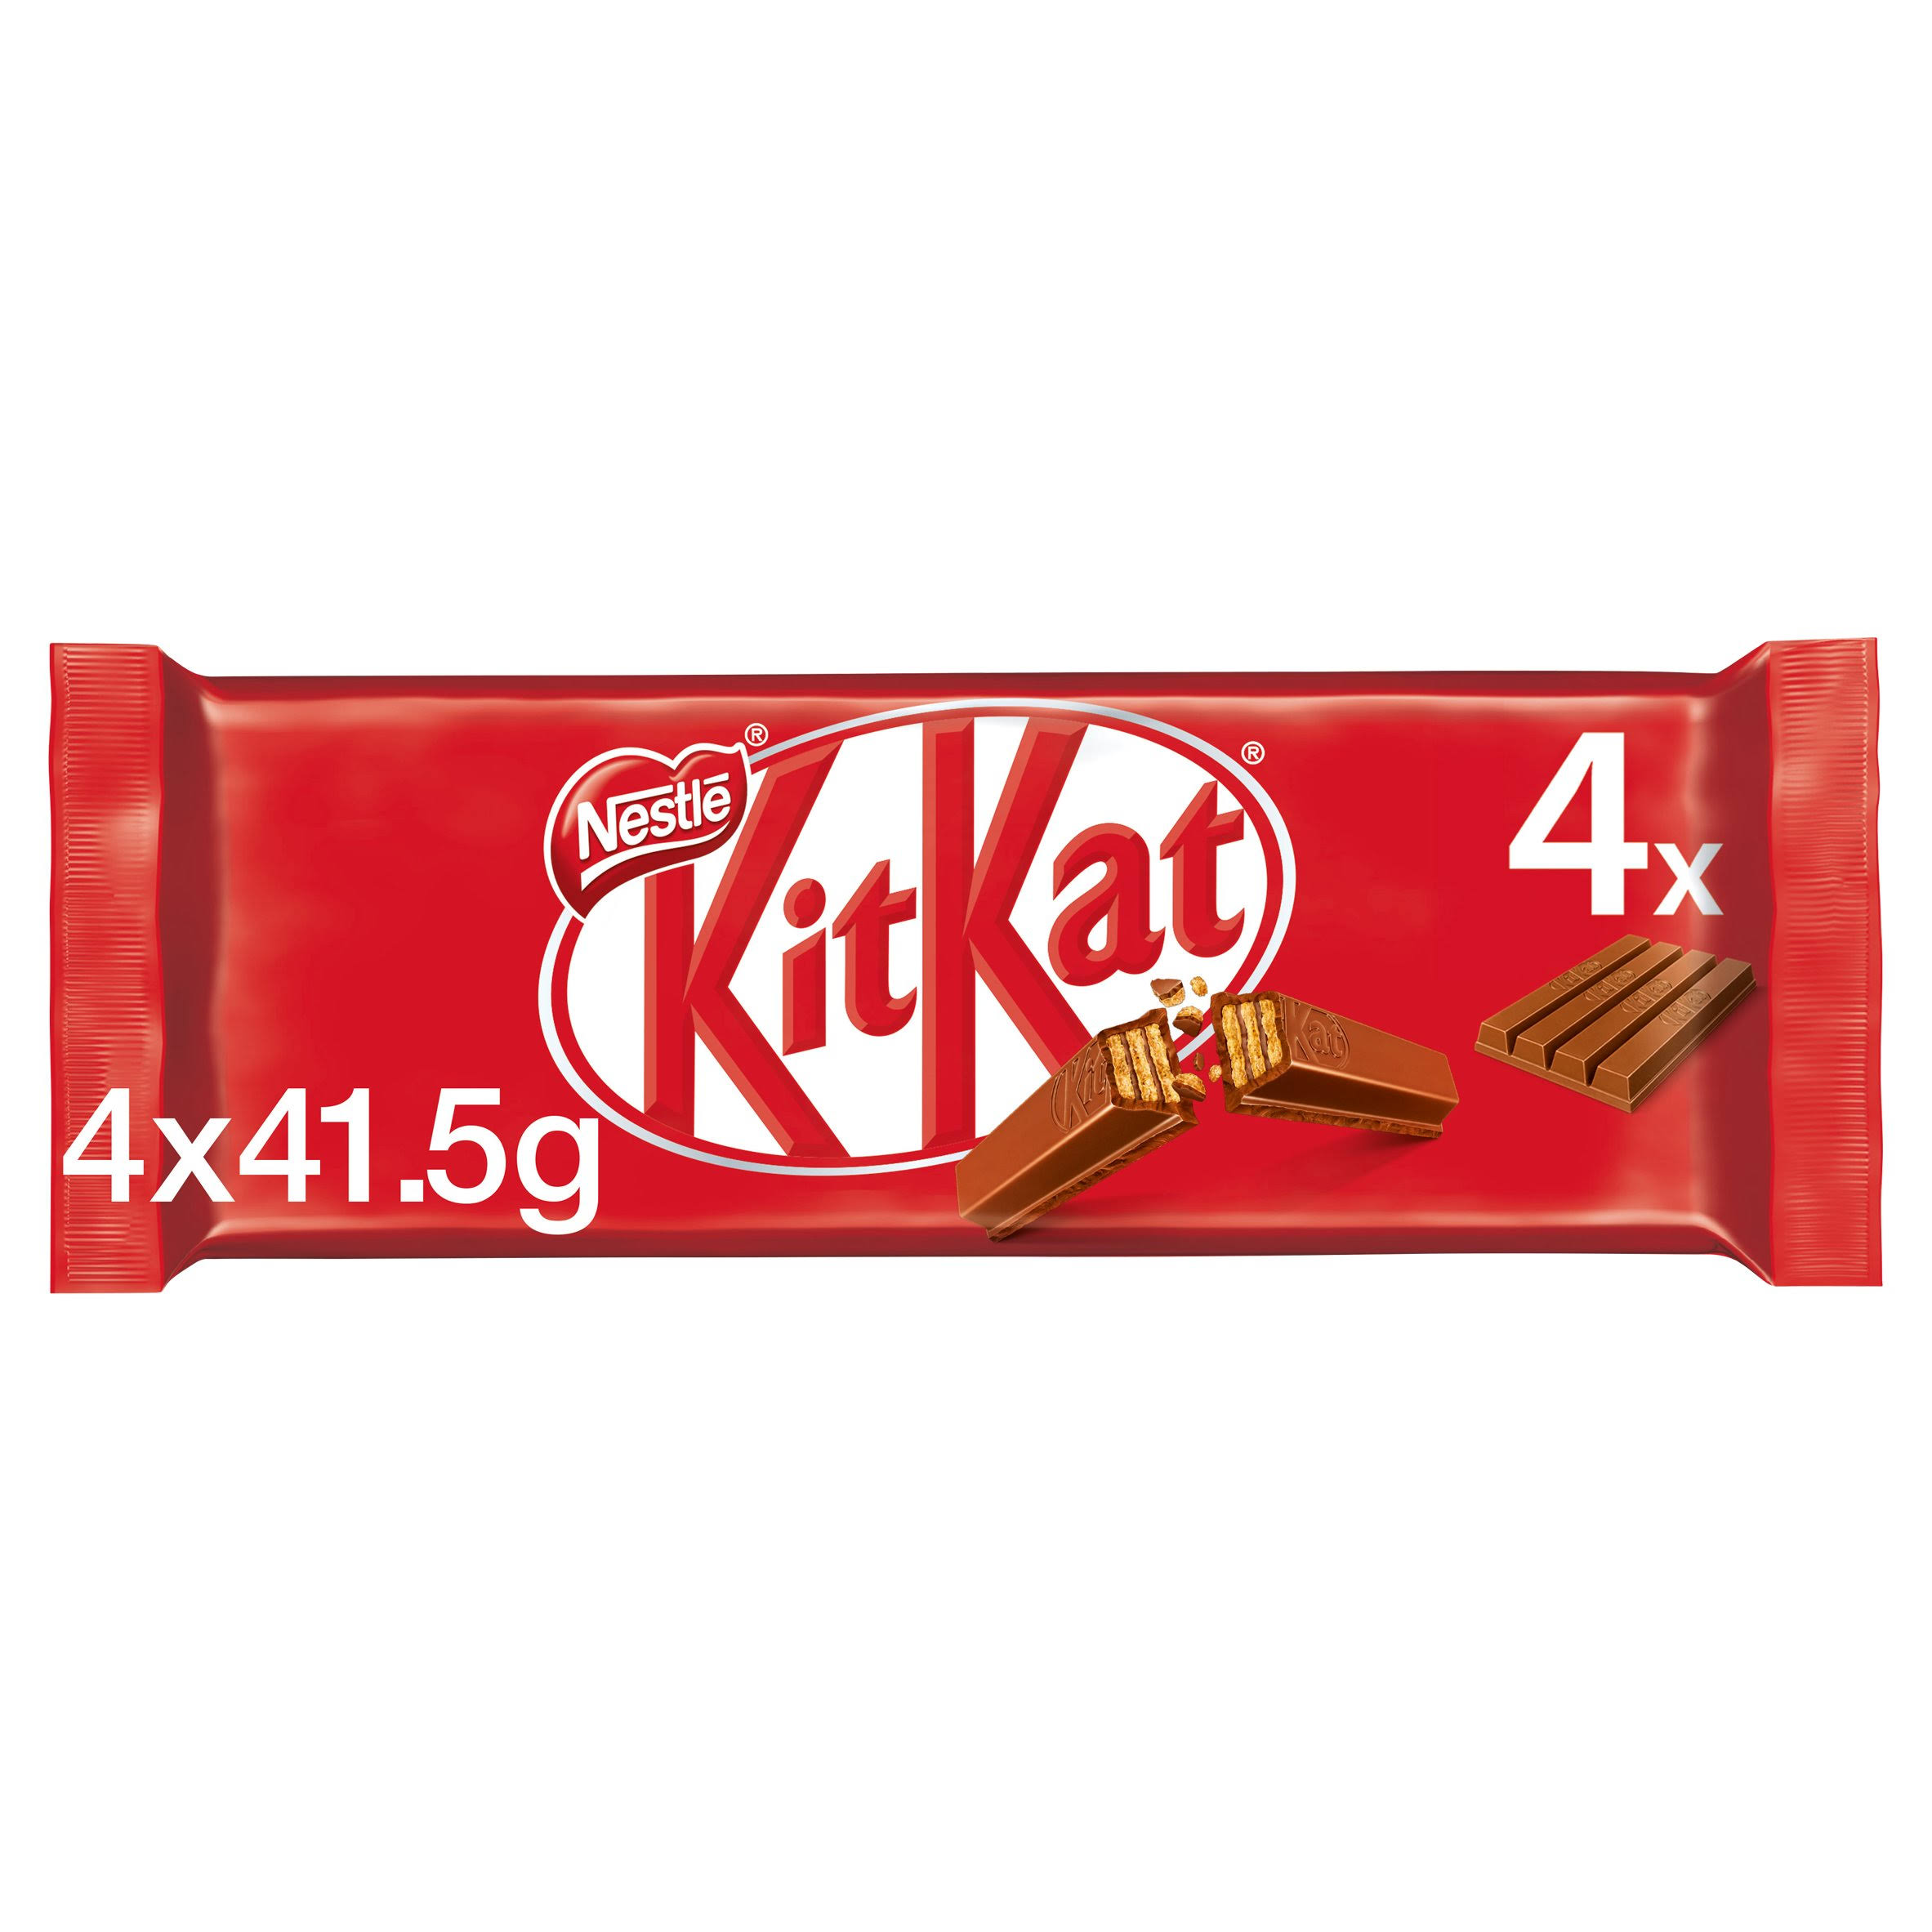 Kit Kat Finger Milk Chocolate Bar - 41.5g, 4pk